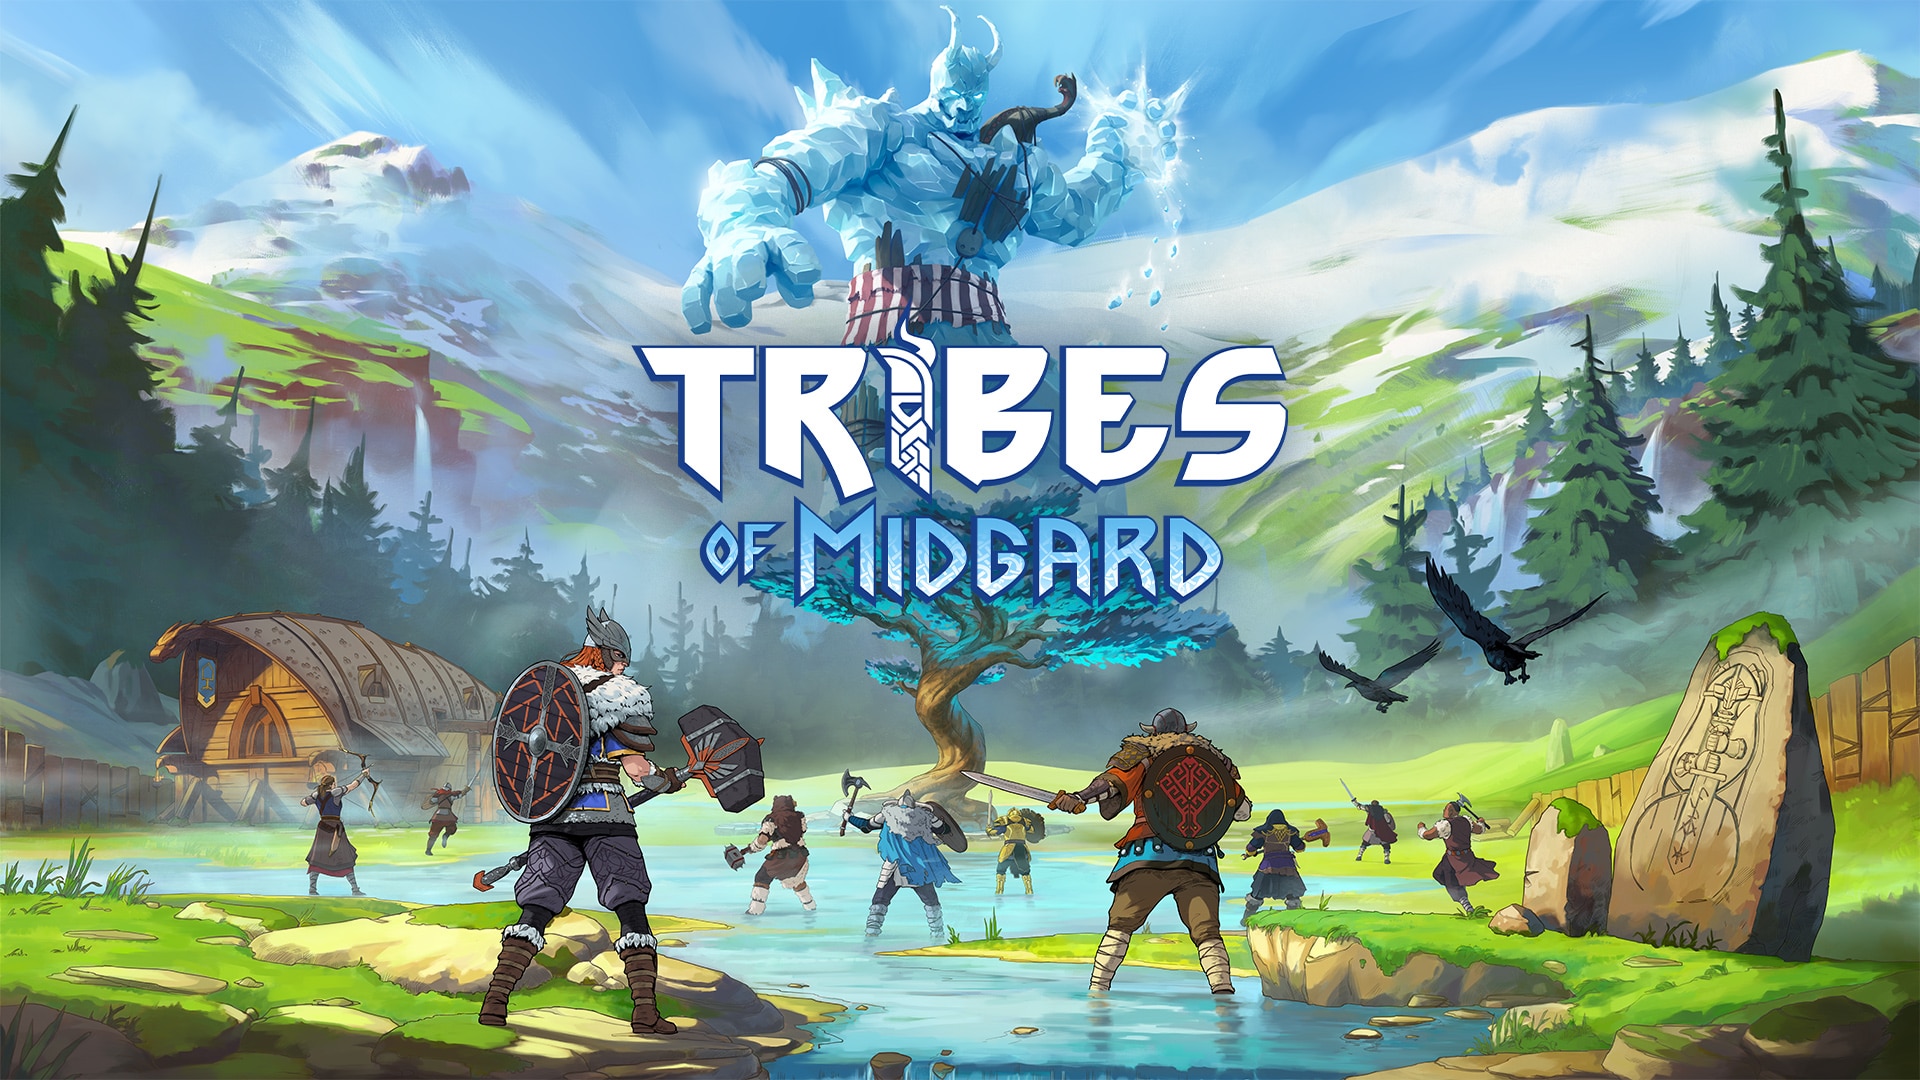 Tribes of midgard screenshot 10 06 2021 key art 12